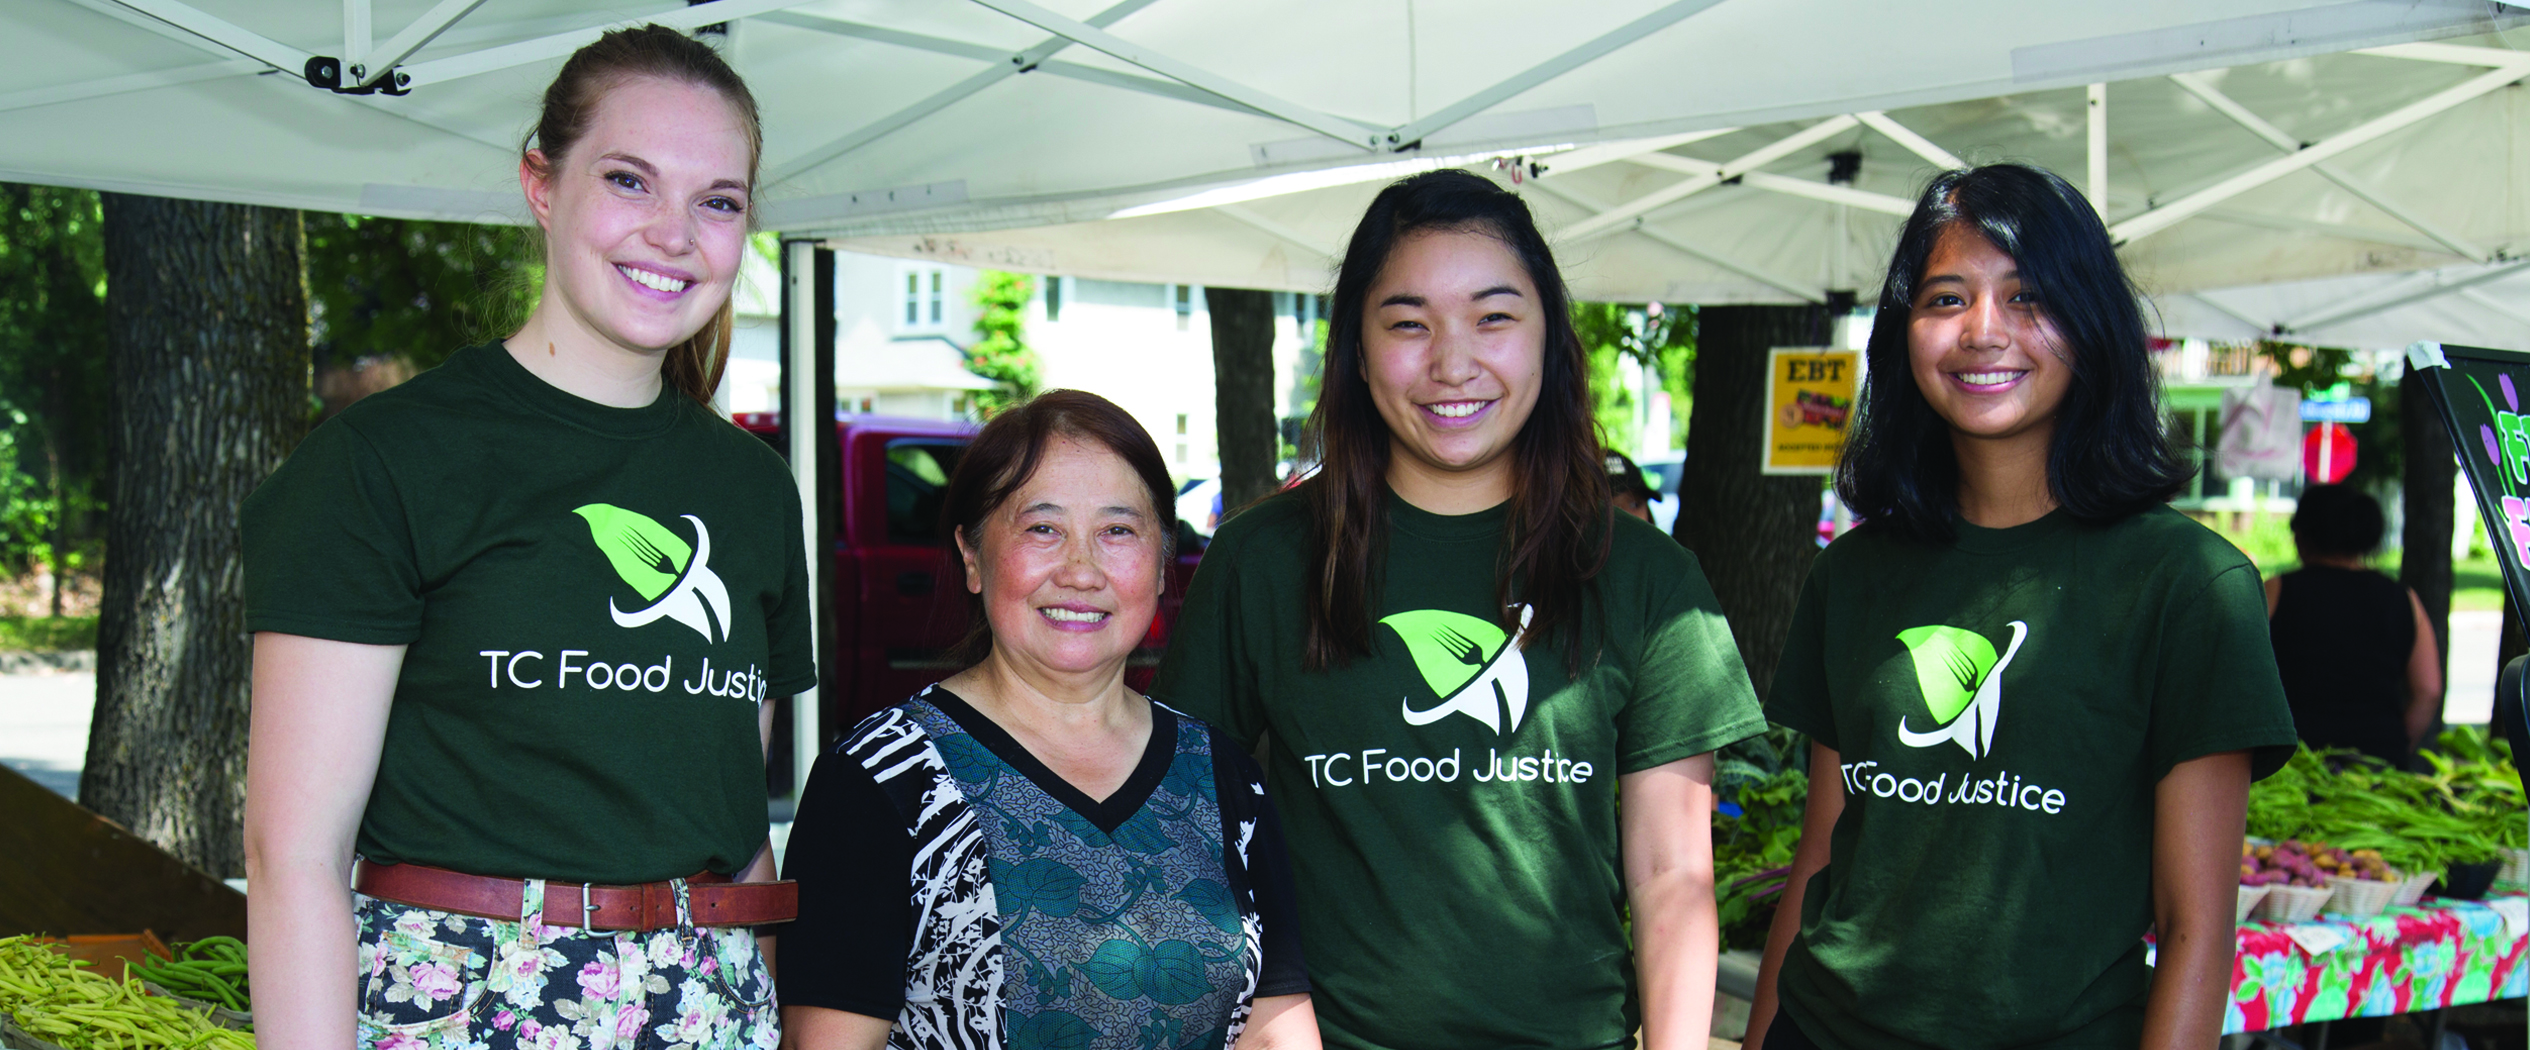 TC Food Justice helps combat food waste.